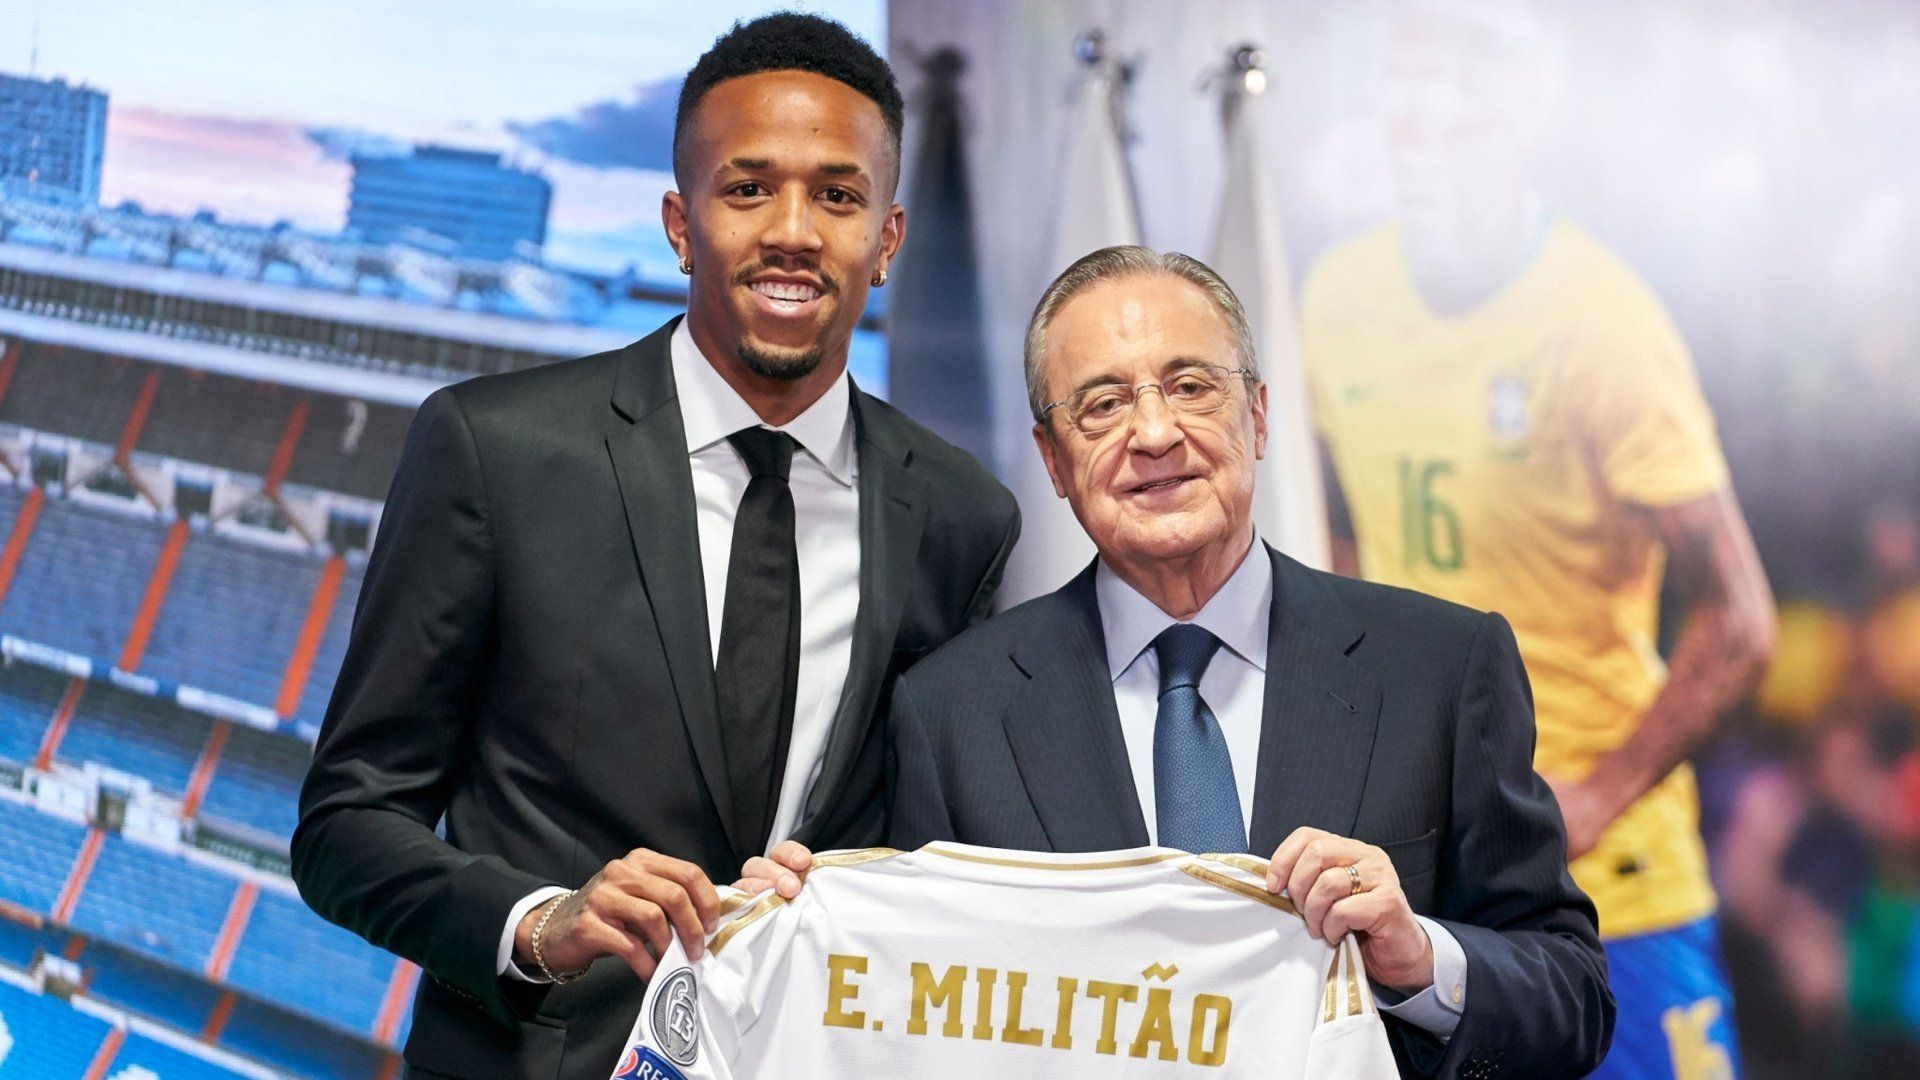 Éder Militão officially unveiled as a Real Madrid player